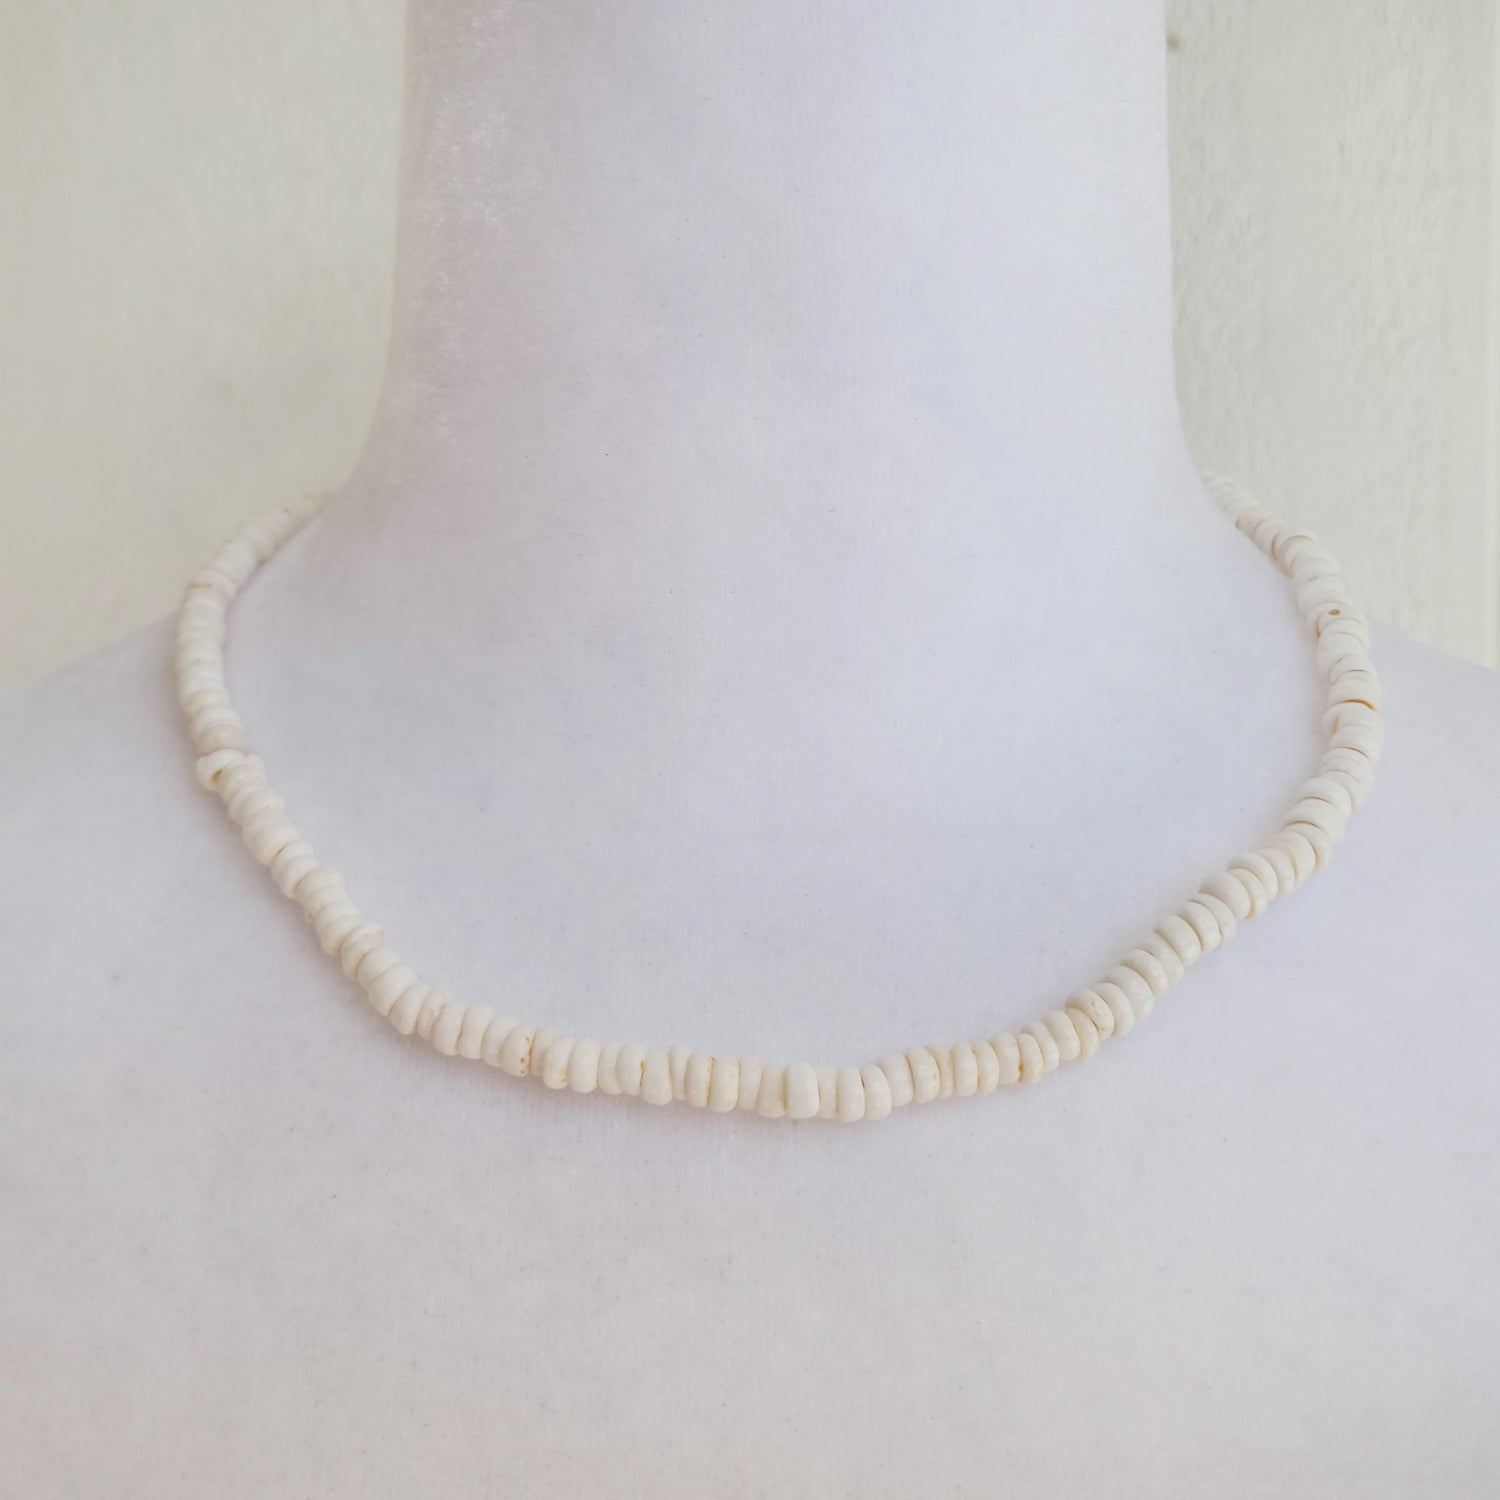 Vintage Puka Shell Necklace GG 25 Grams | eBay